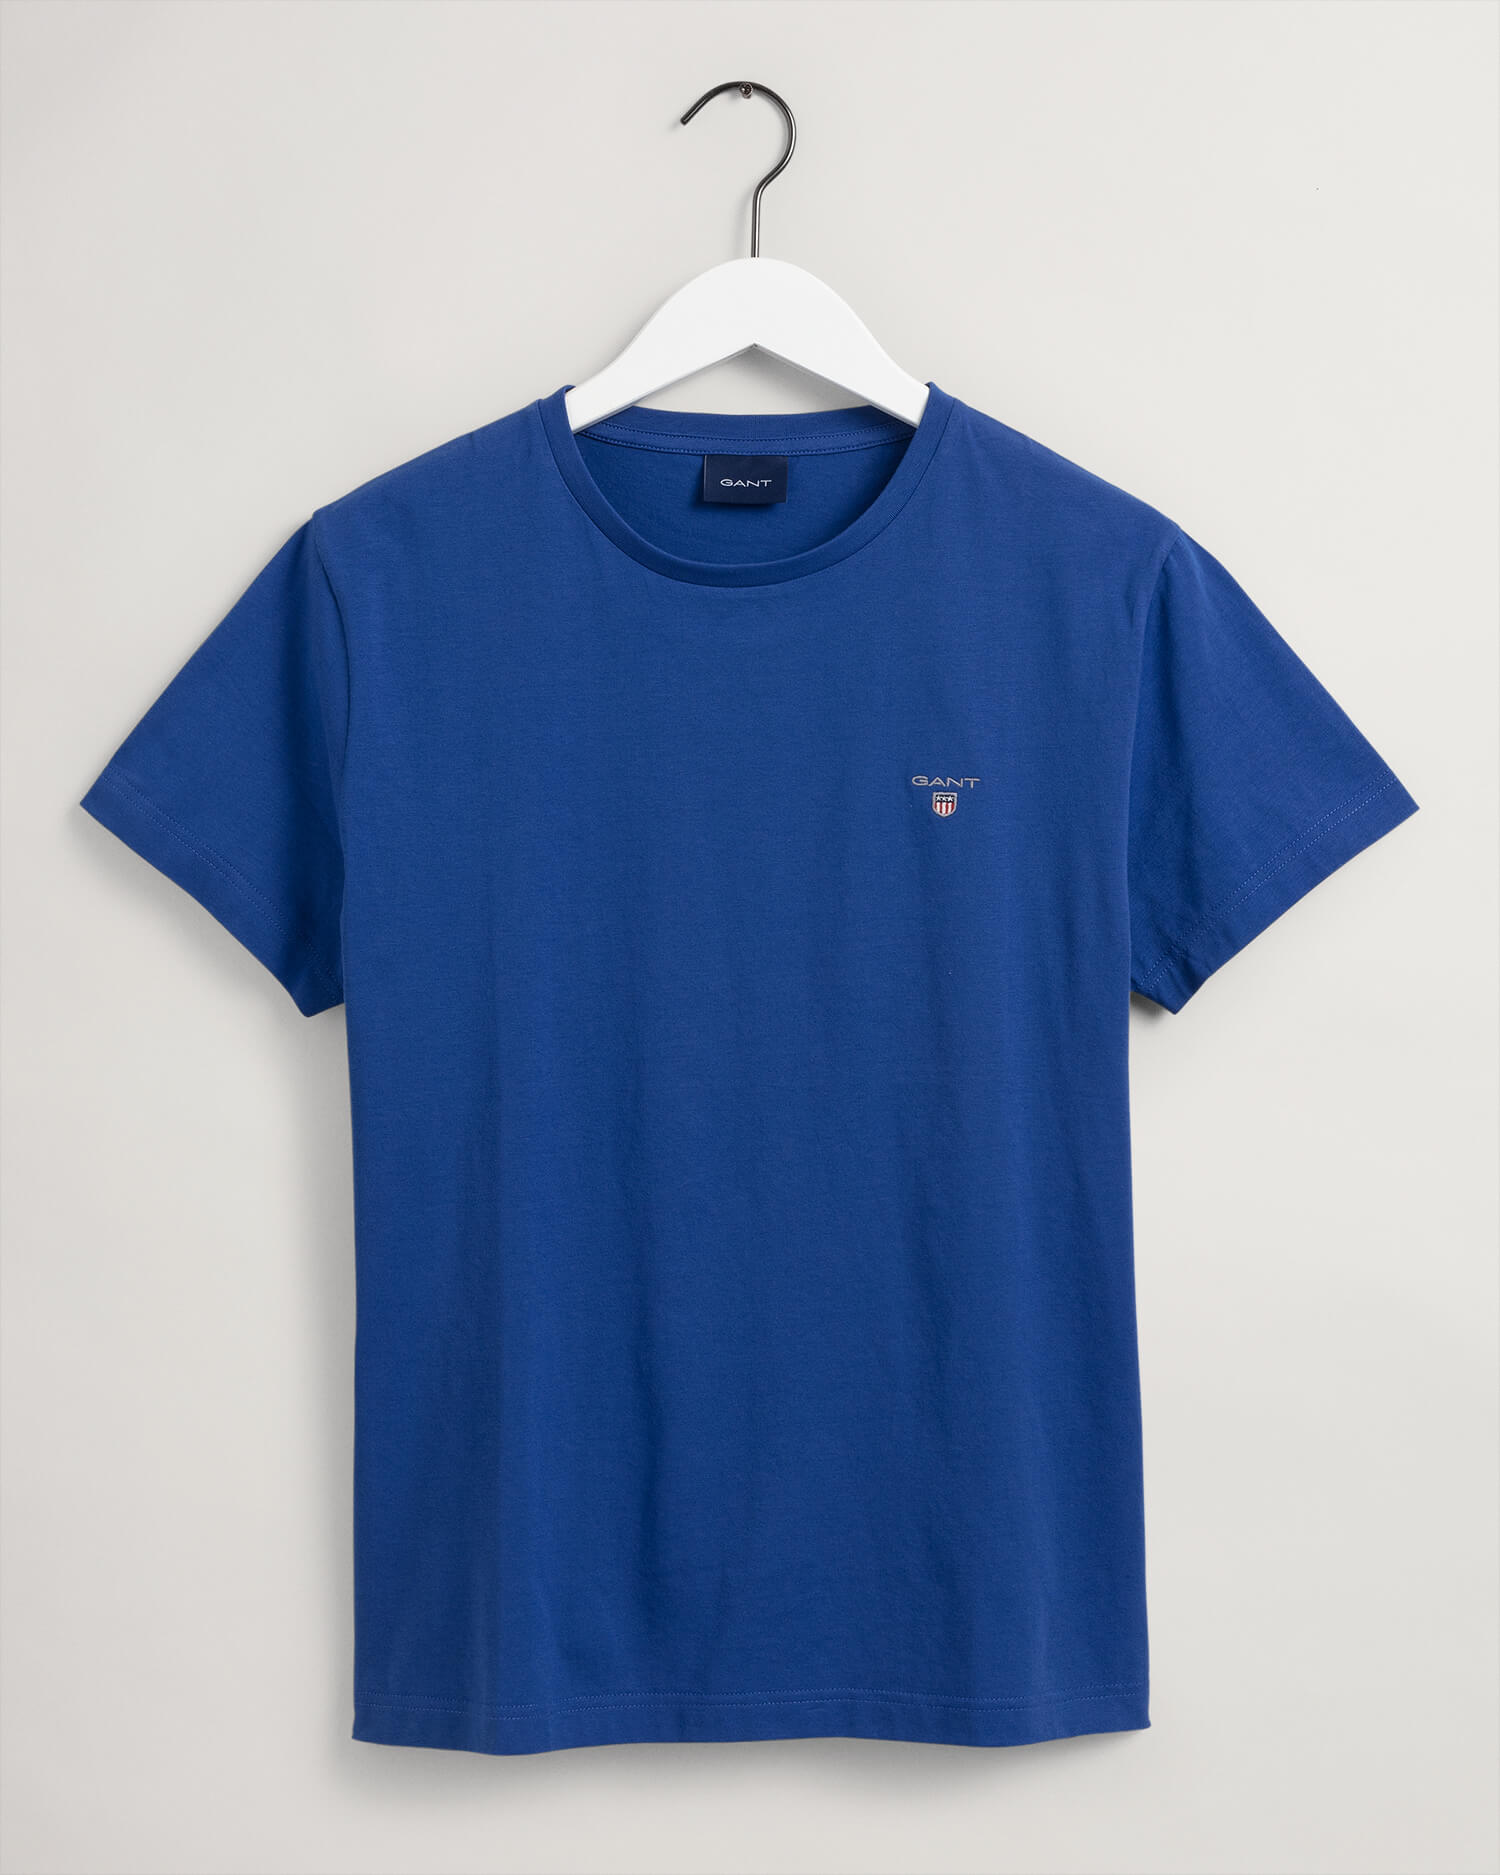 Gant Original T-Shirt - Davids Haslemere of